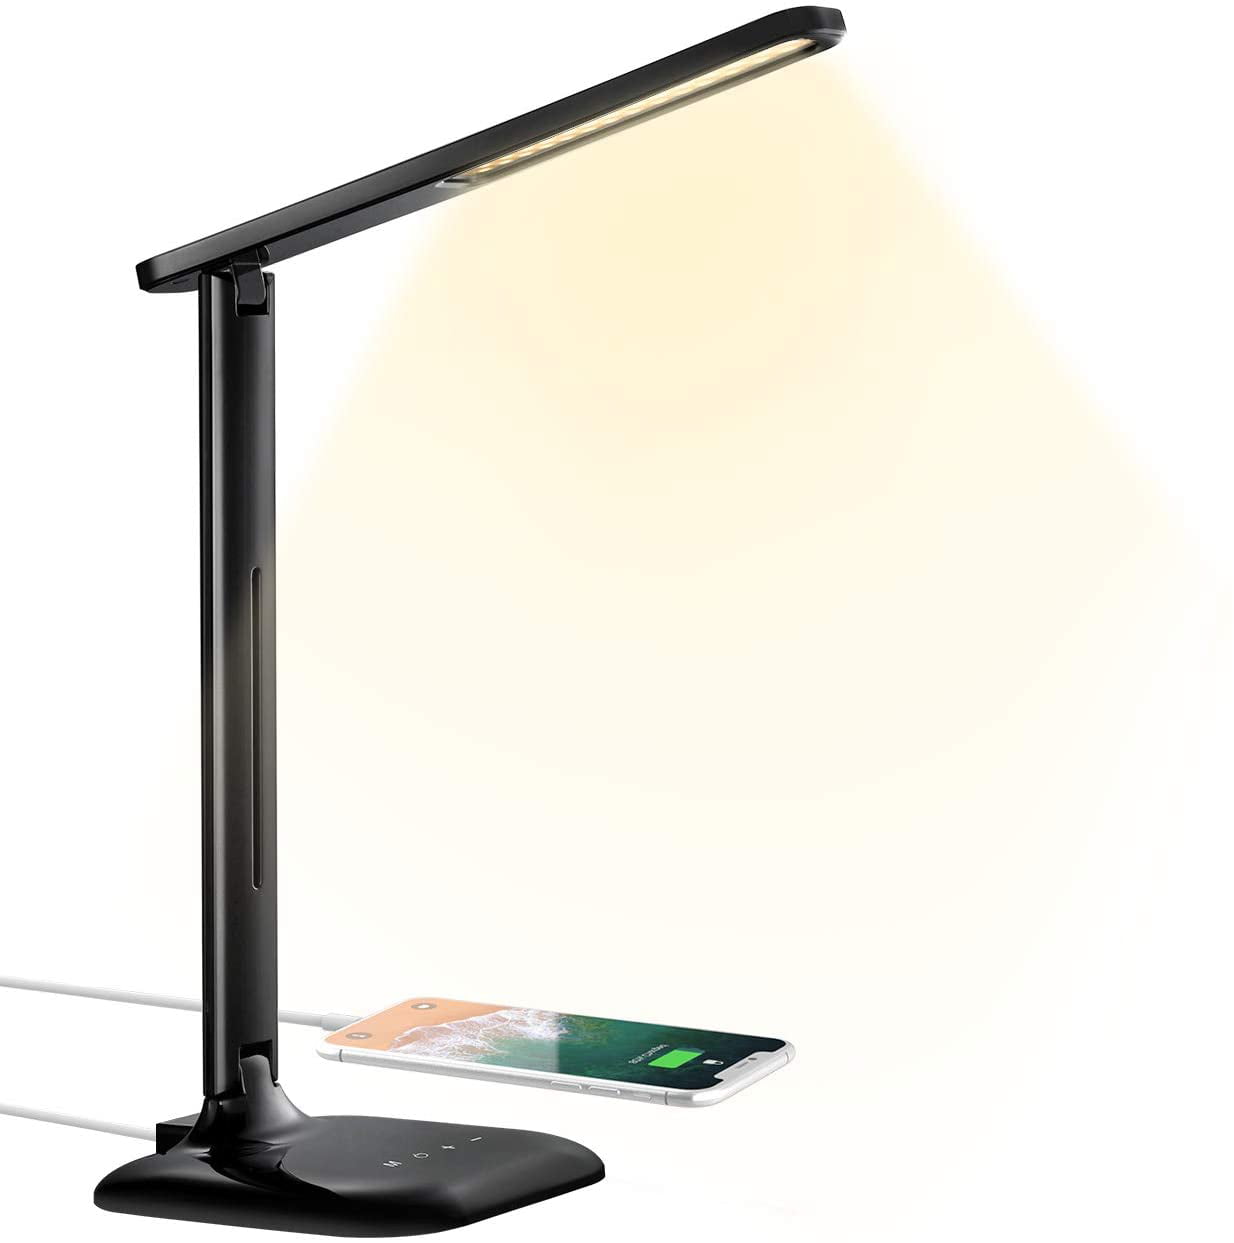 WAYZ Desk Foldable Smart LED Lamp 5 Brightness Levels, 3 Colors Light Mode